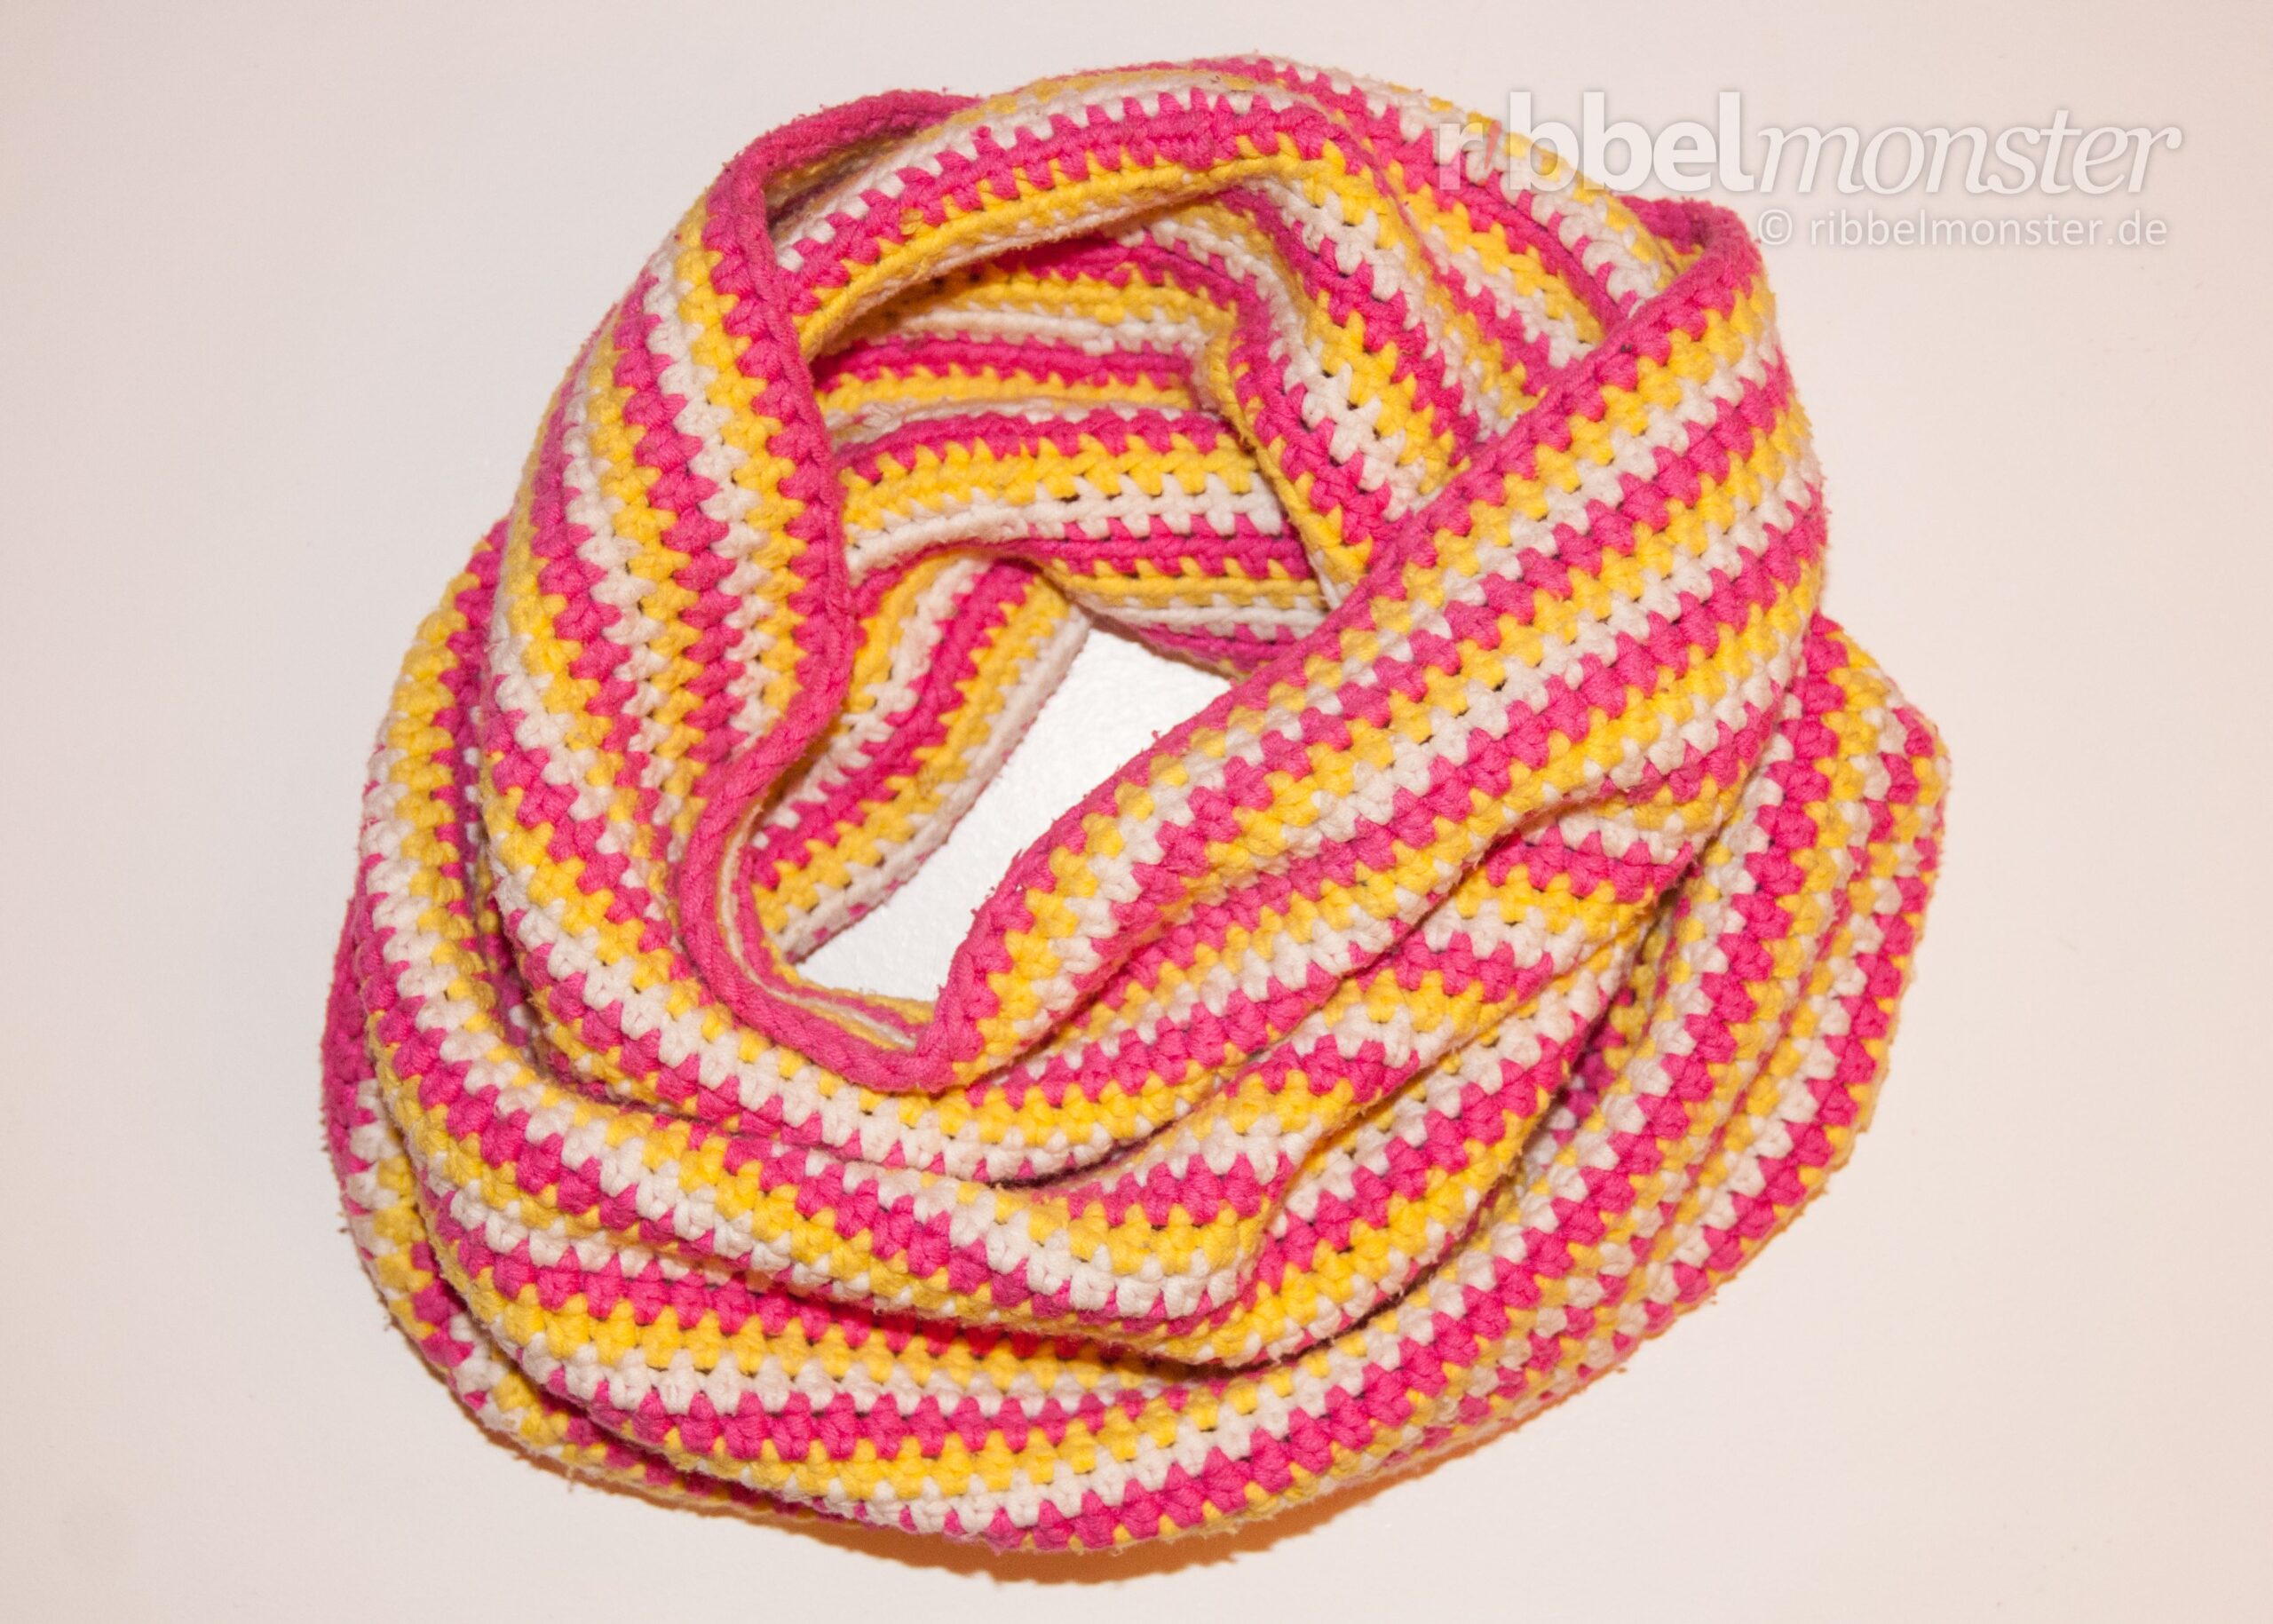 Crochet Loop – with Half Treble Crochet Stitches